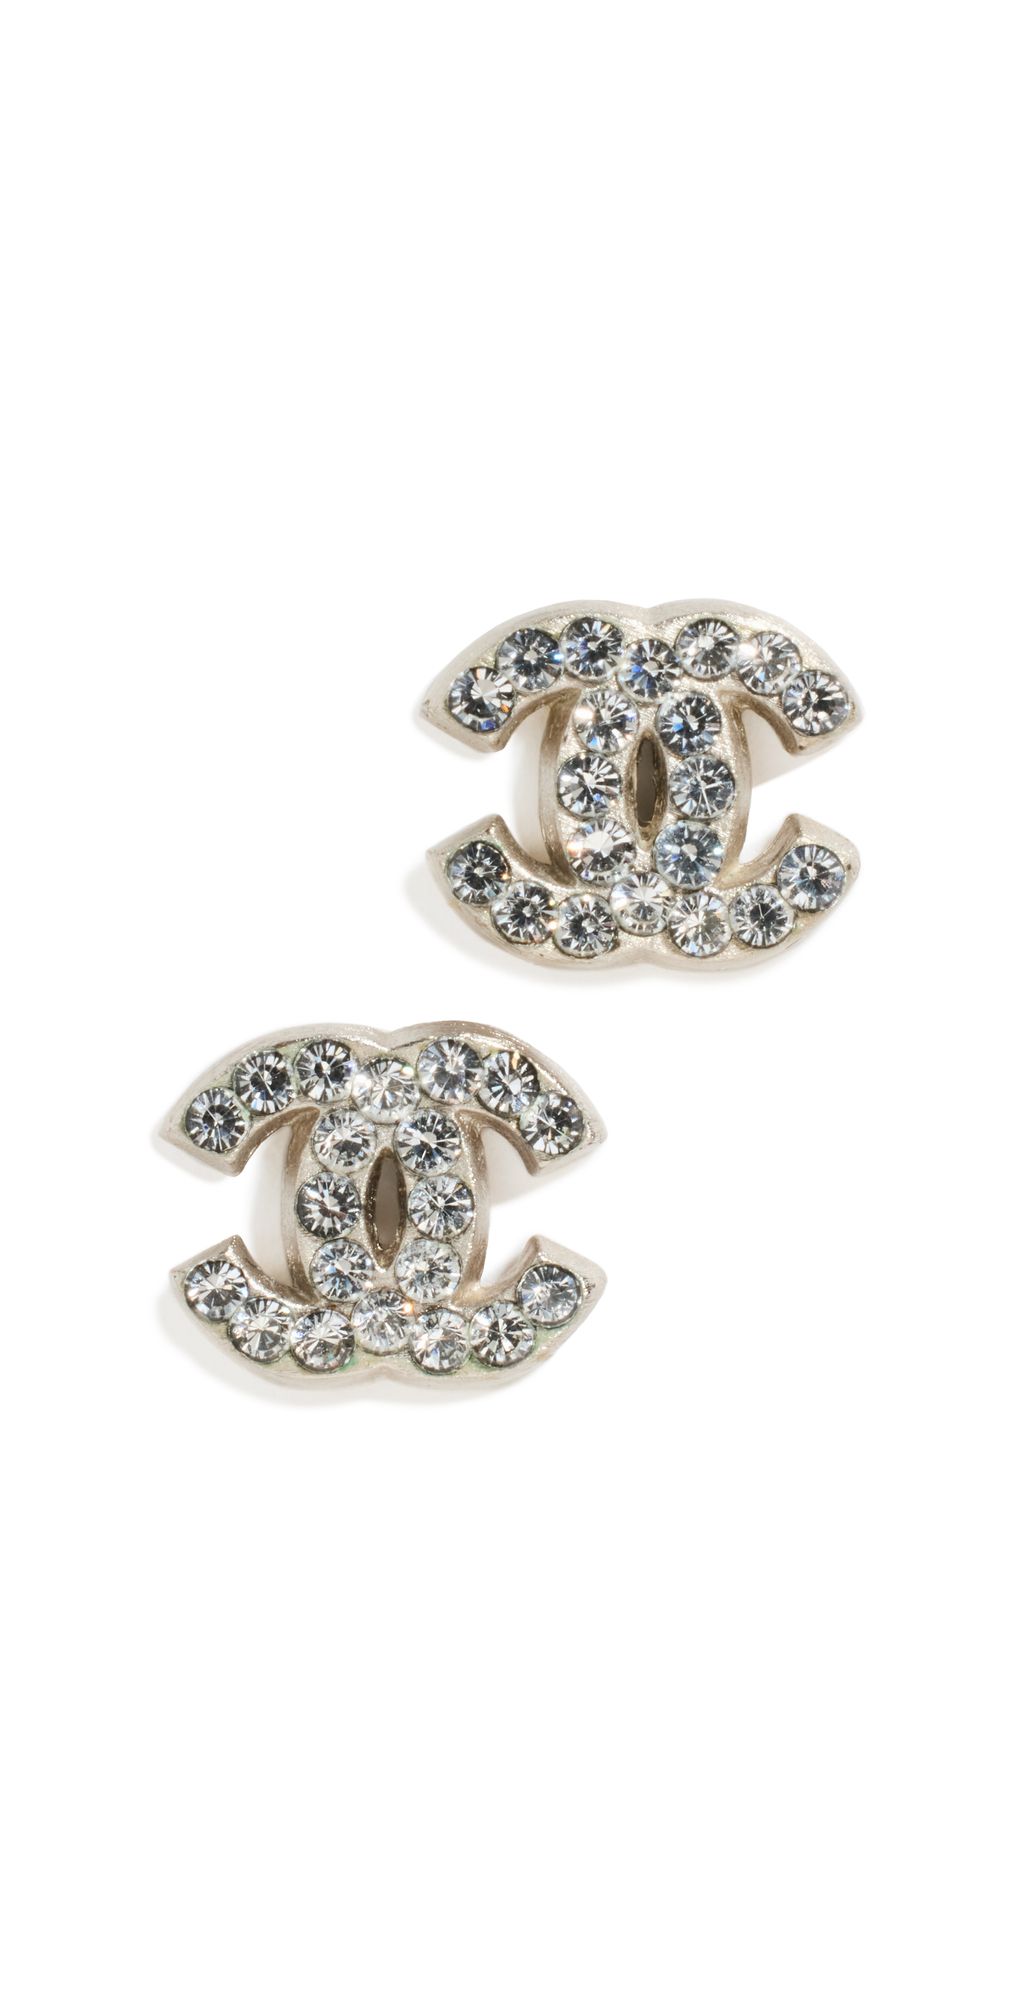 Shopbop Archive Chanel Crystal Flat Cc Stud Earrings | Shopbop